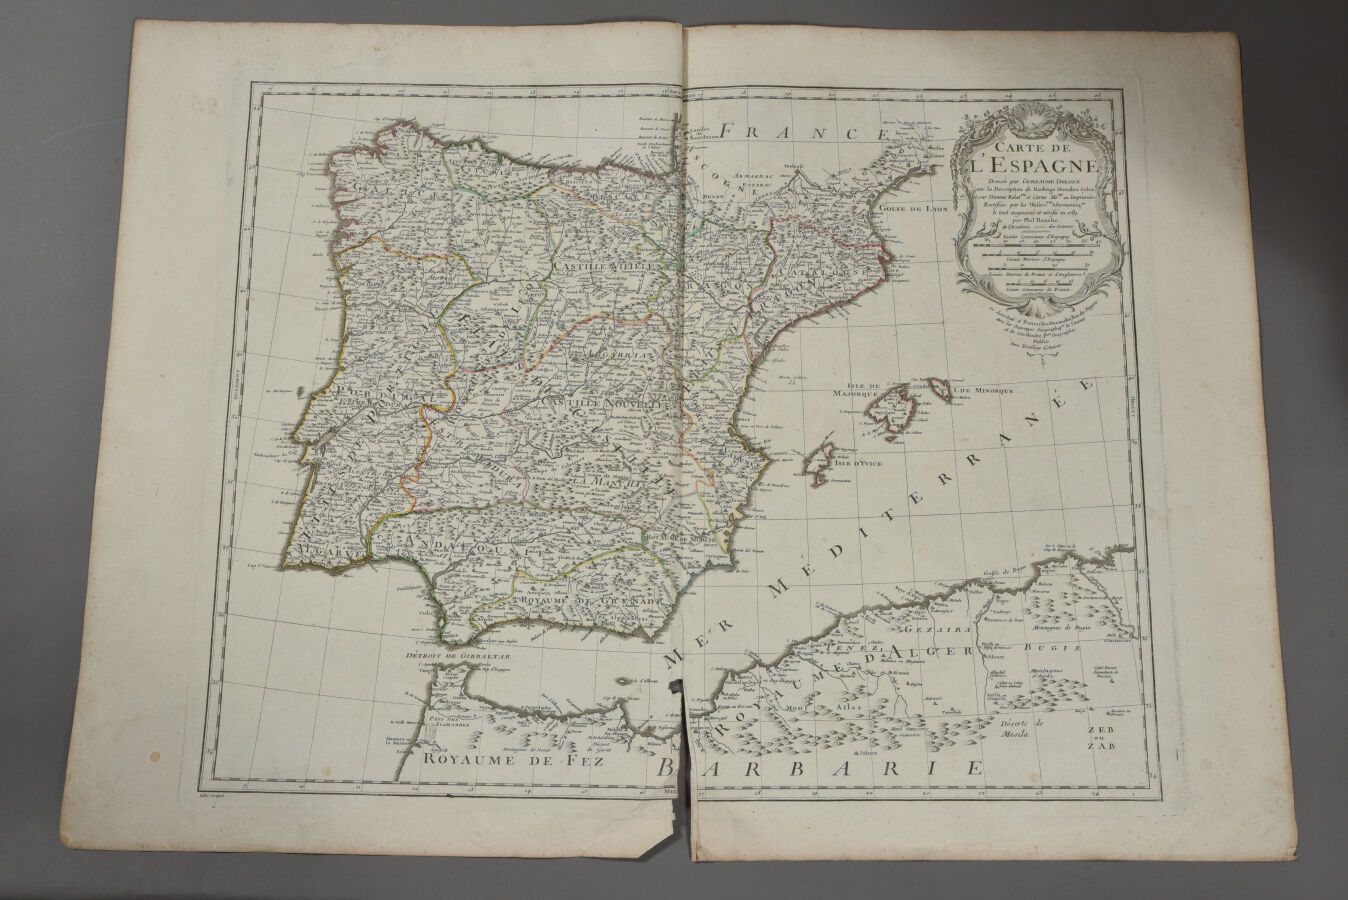 Null 纪尧姆-德利萨尔和他的继承人德佐赫
(法国，18世纪)
西班牙地图。1789.
双开本。
在标签的下部有断裂。